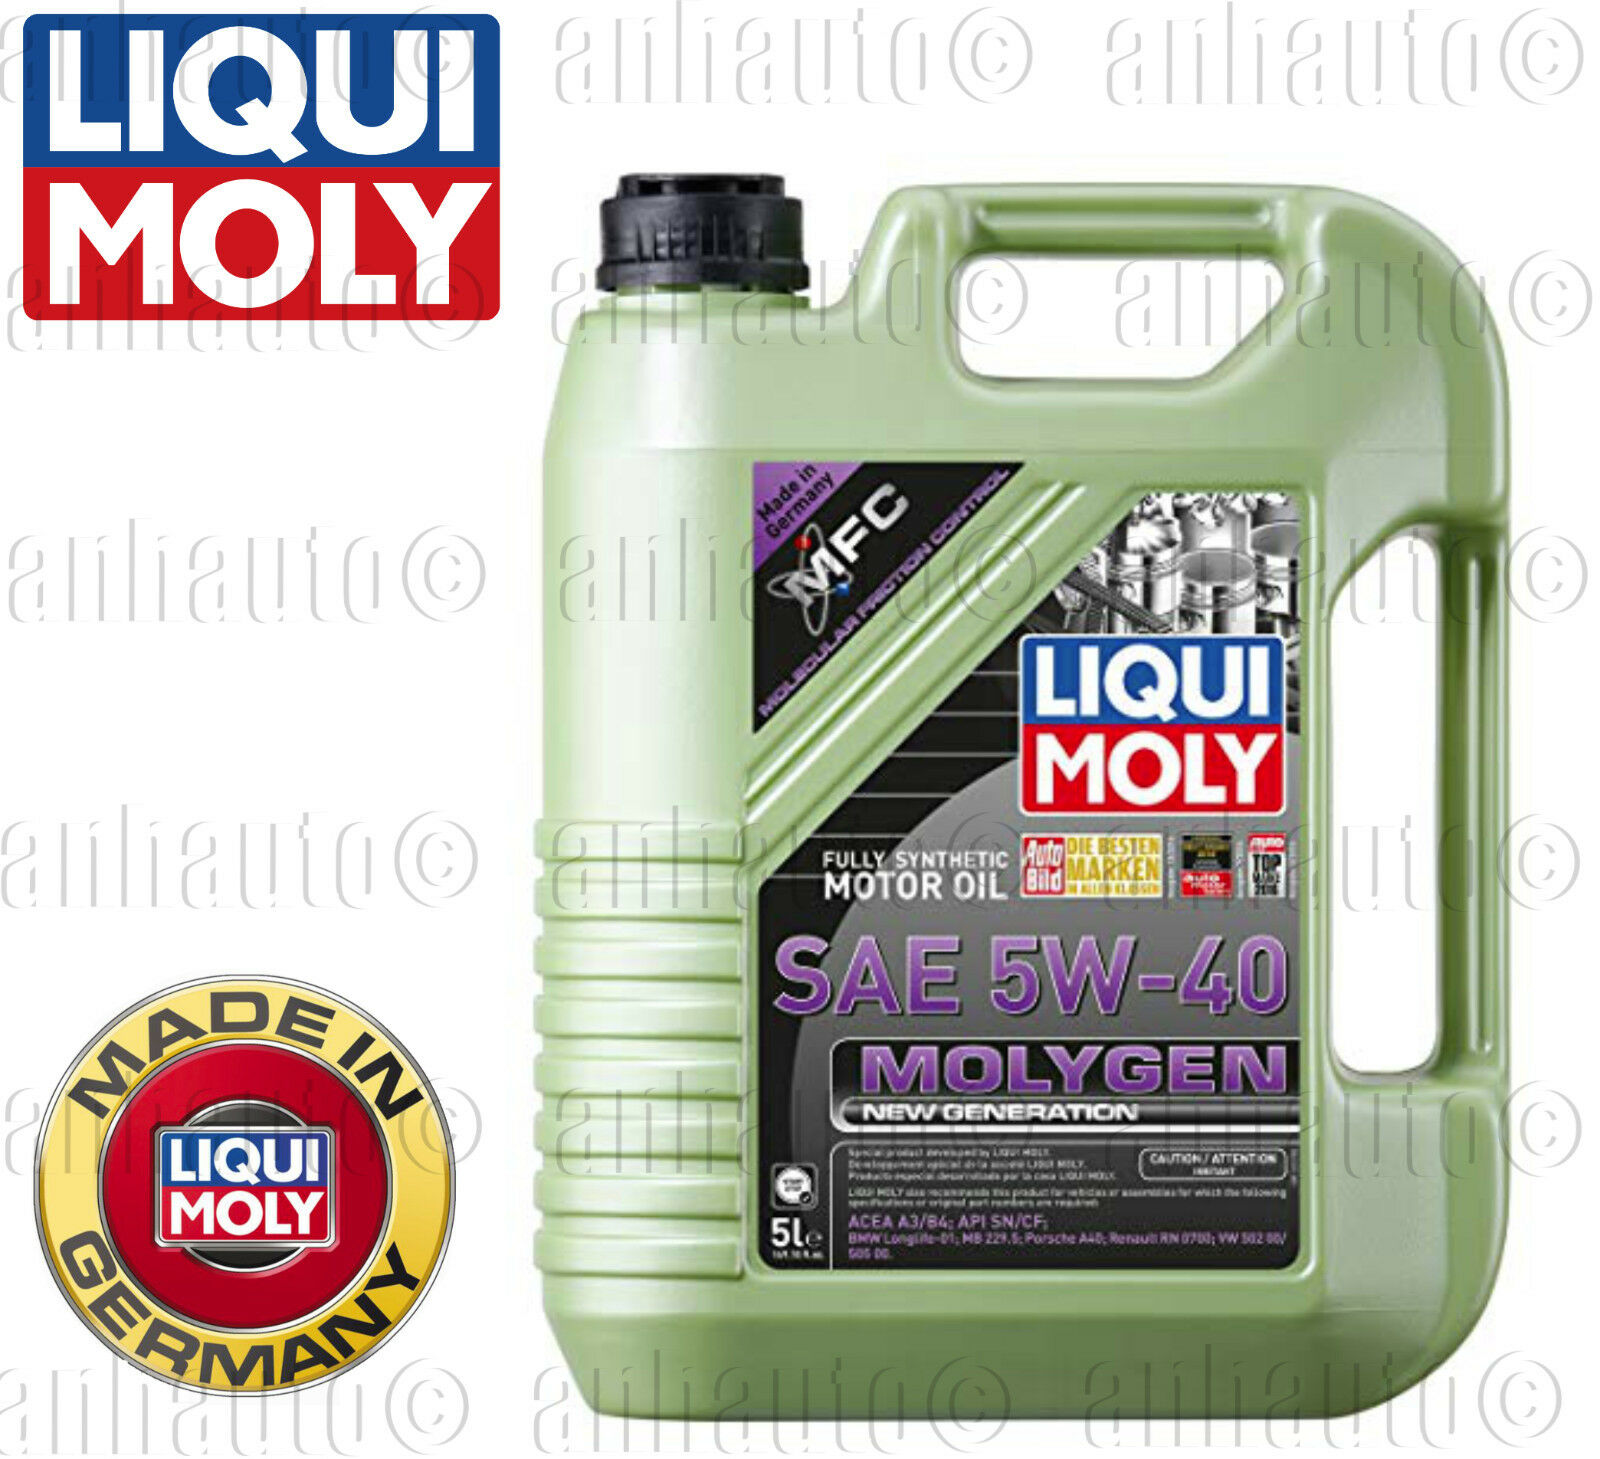 5-liter Liqui Moly Molygen  Full Synthetic Engine Oil ; 5w-40  ( 20232 )